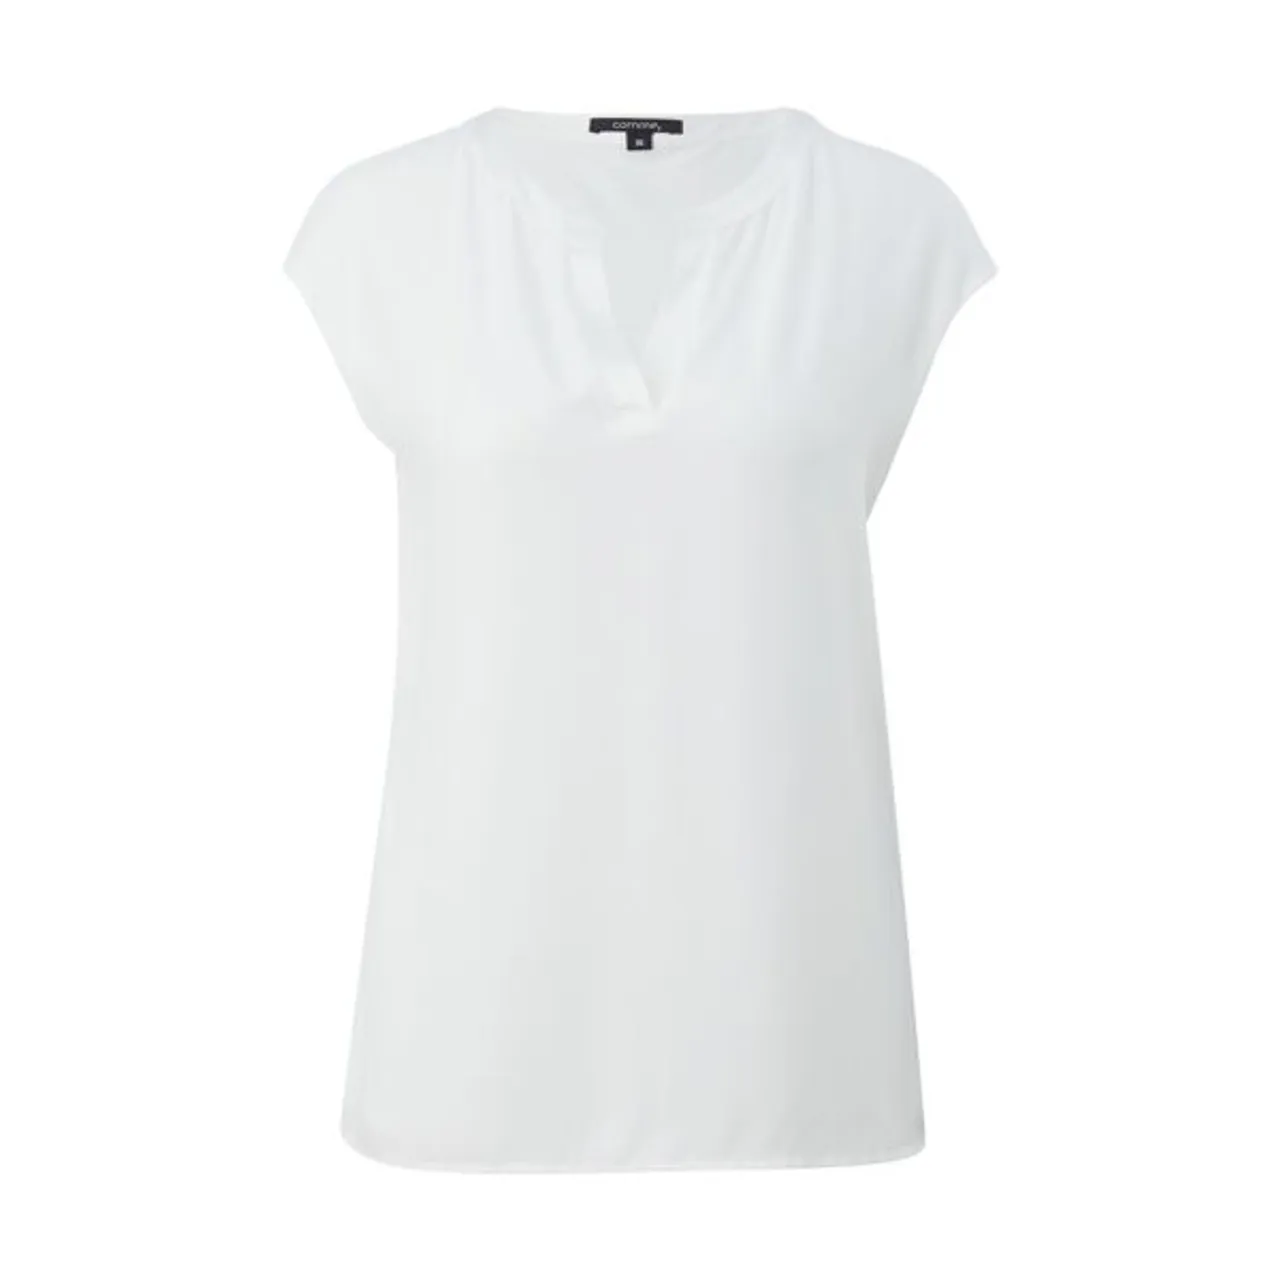 Blusenshirt COMMA Gr. 44, weiß (offwhite) Damen Shirts Blusenshirts